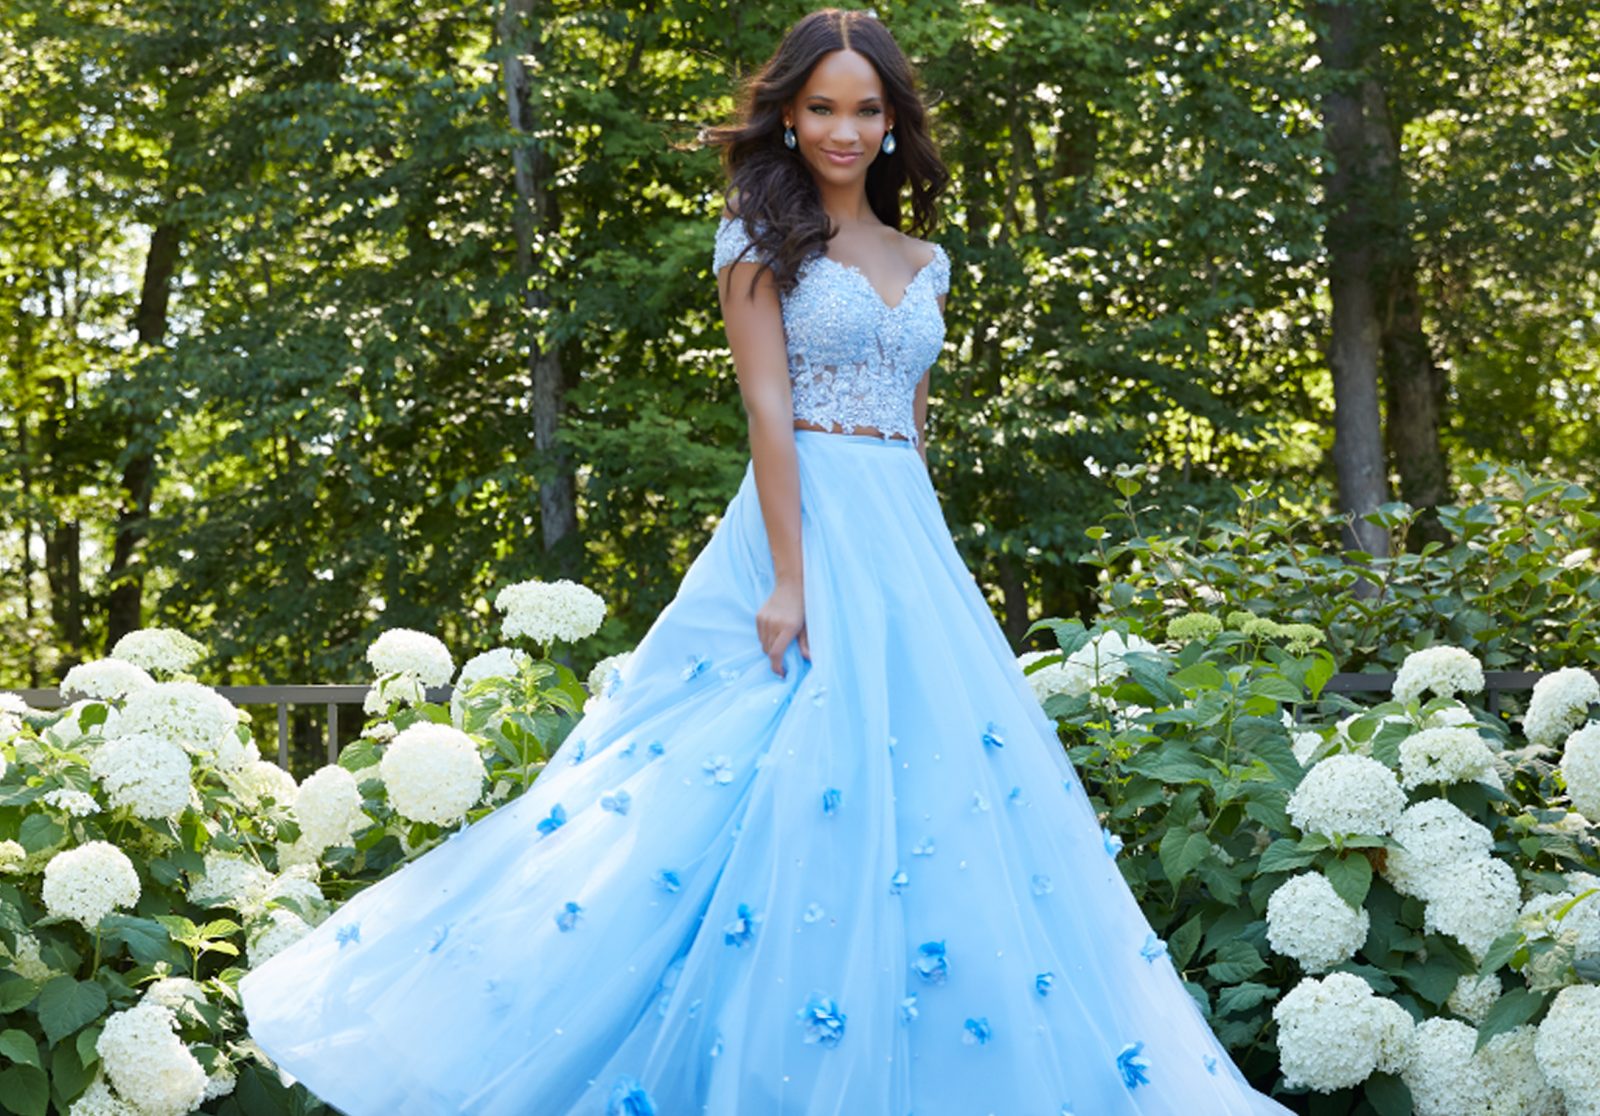 Pick Rainbow of Prom Dresses & I'll Guess Generation & … Quiz blue prom dress11